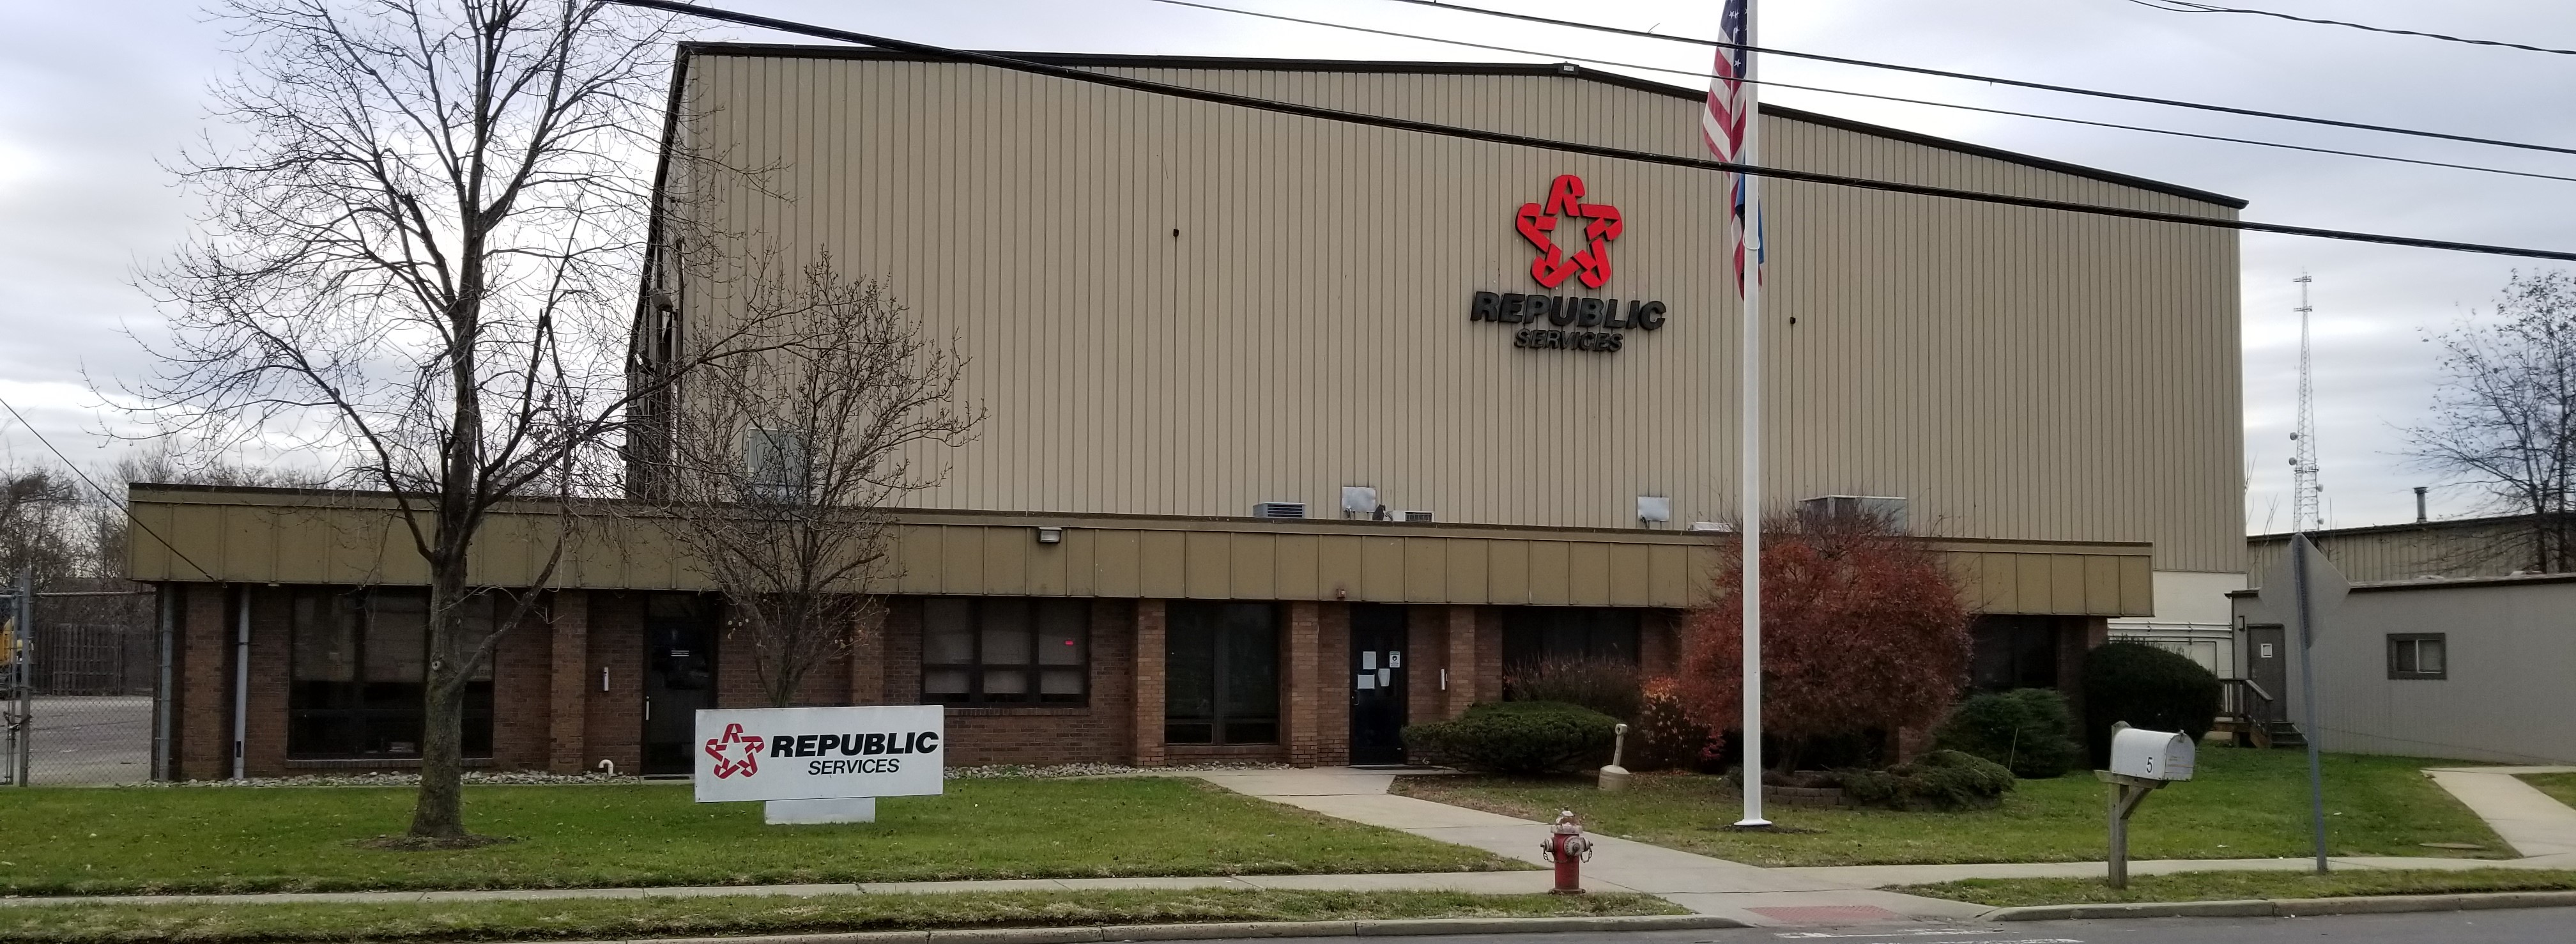 Republic Services - New Brunswick NJ Facility Alternate Angle